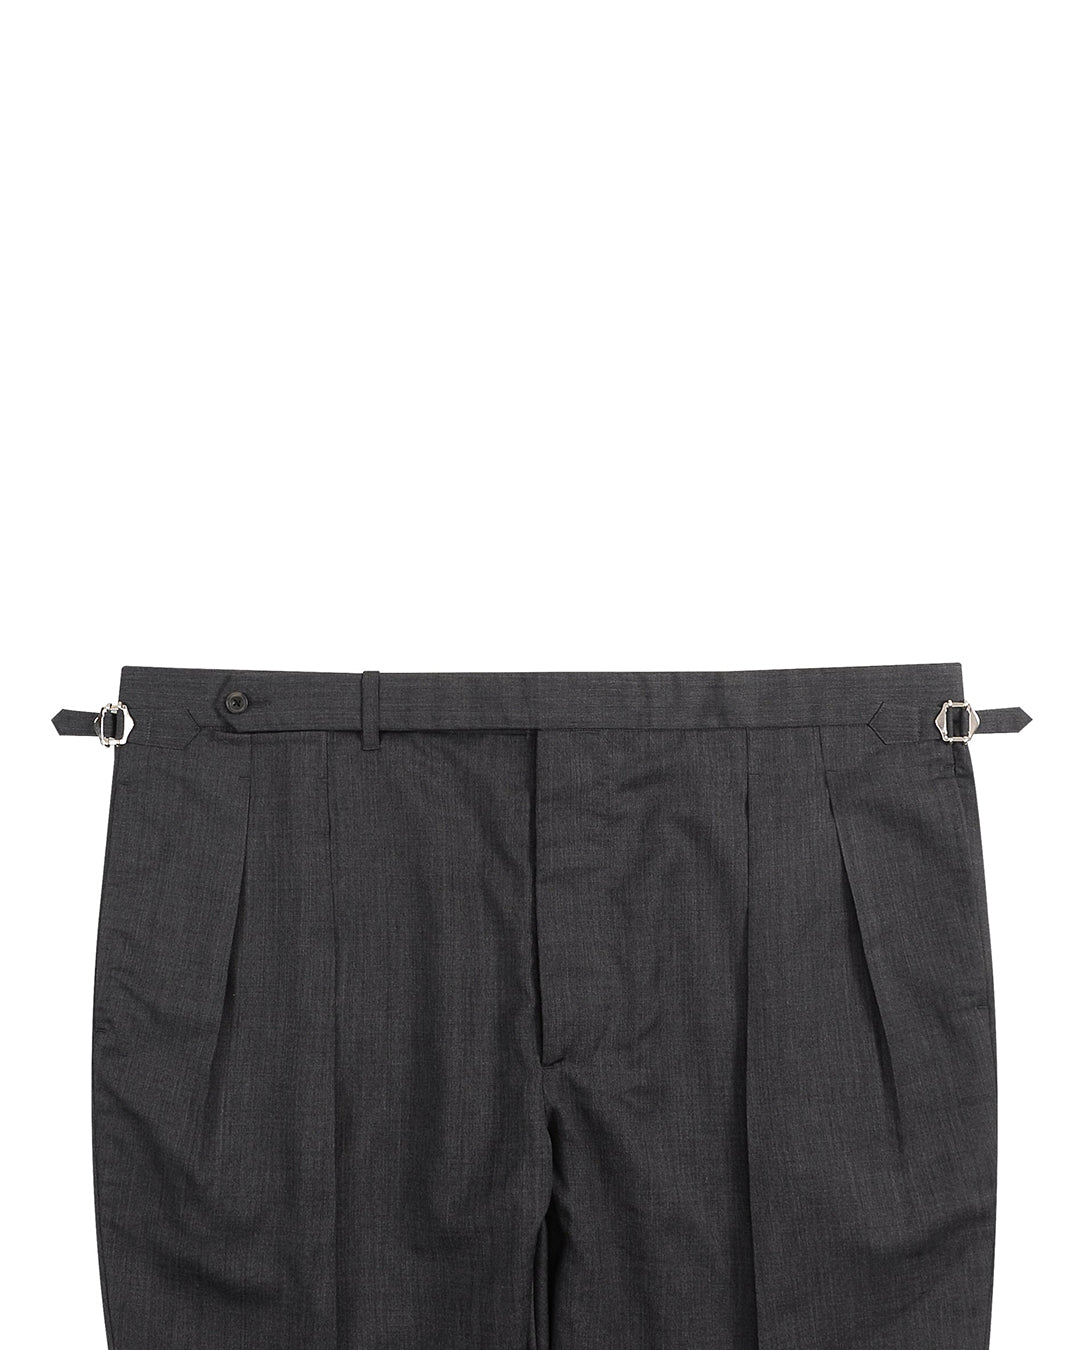 Washable Wool Pants: Plain Charcoal Grey High Waisted Pant